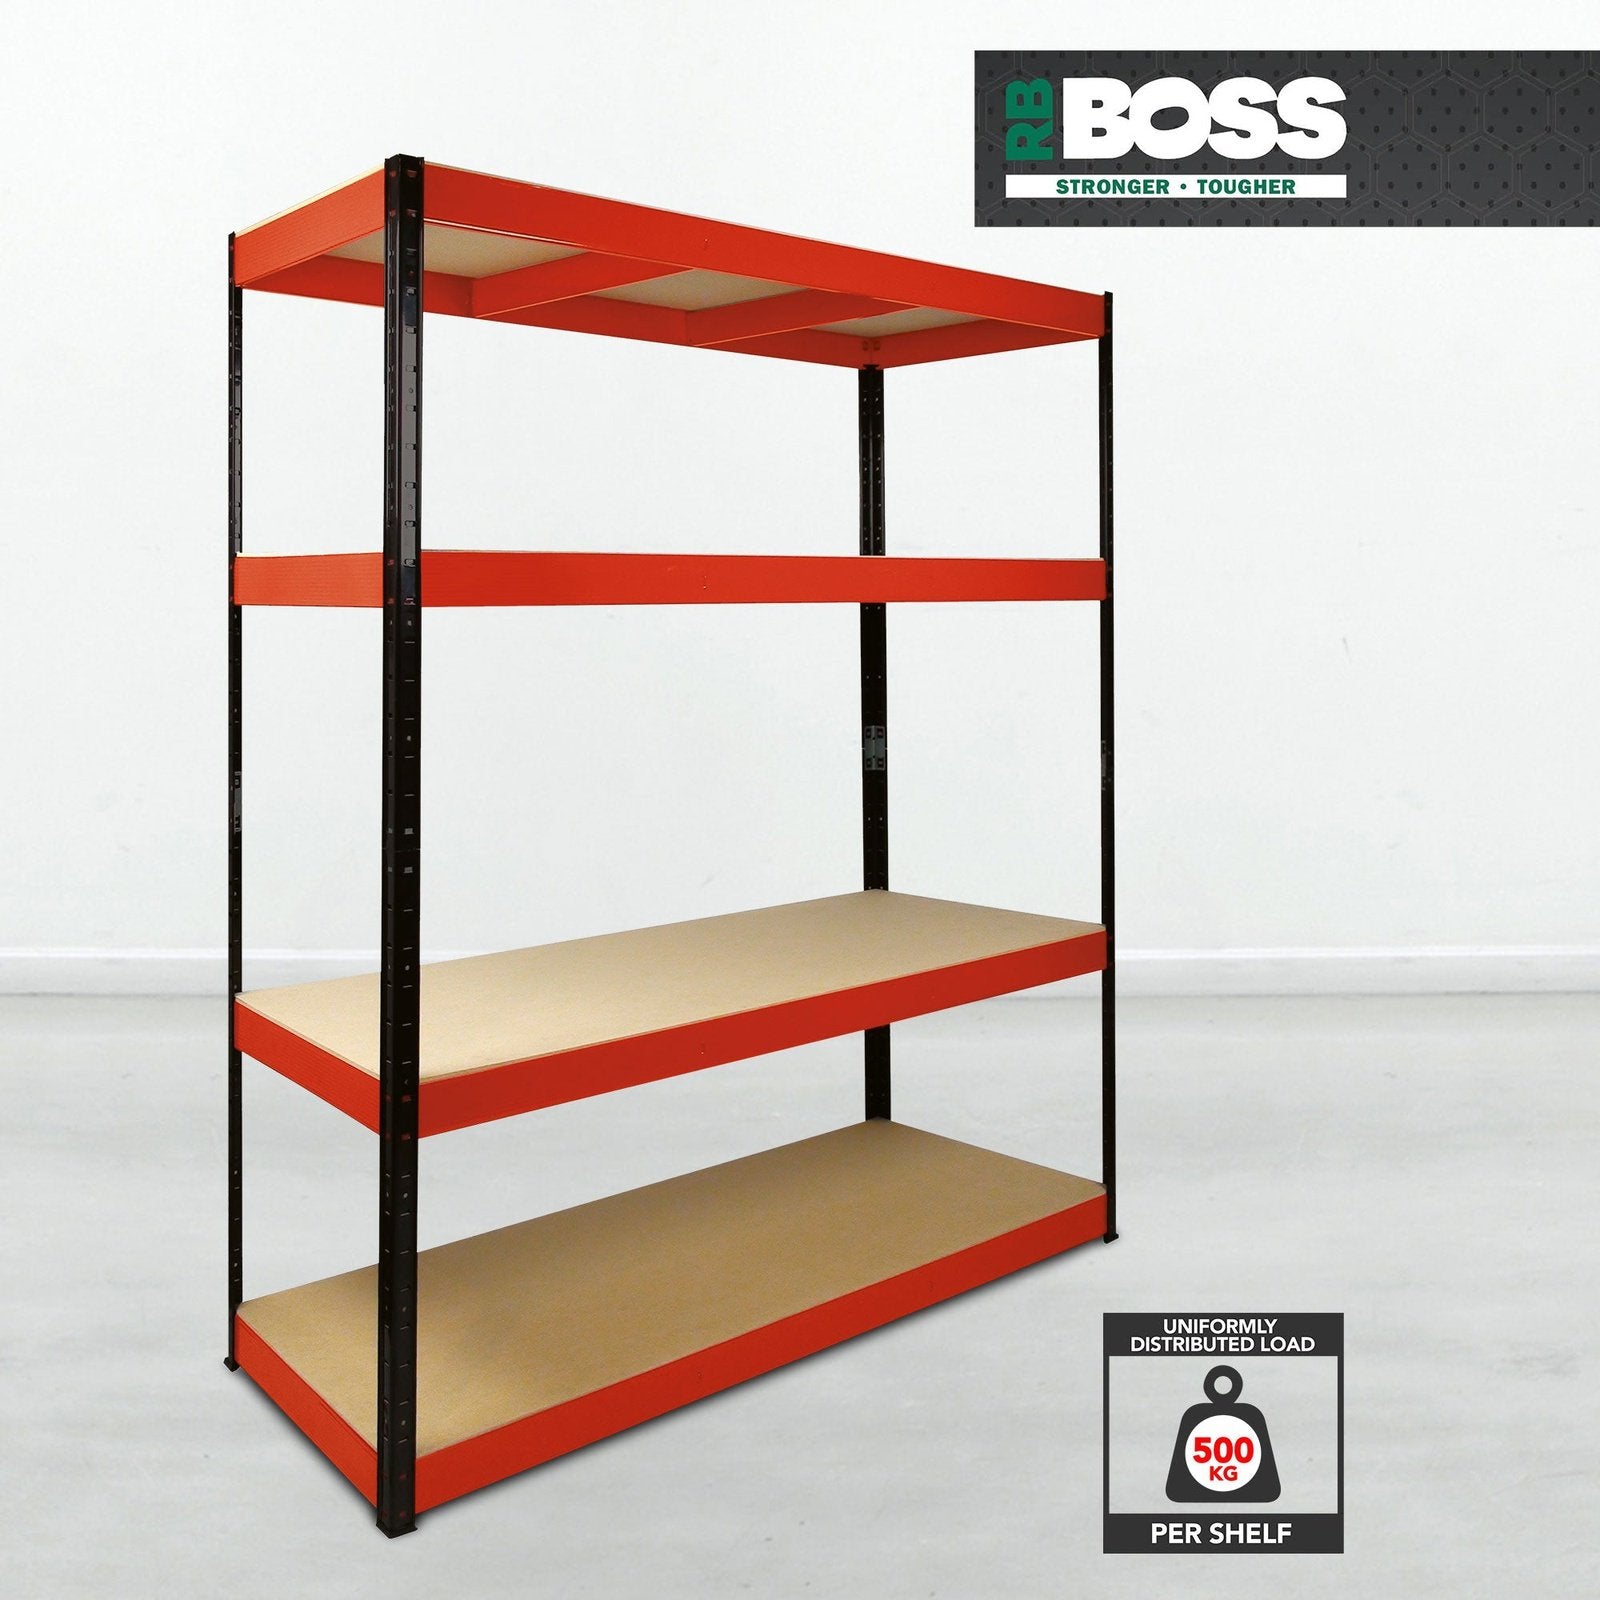 RB Boss 4x Tier Shelving Unit - 1800x1600x600mm 500kgs UDL - Office Products Online